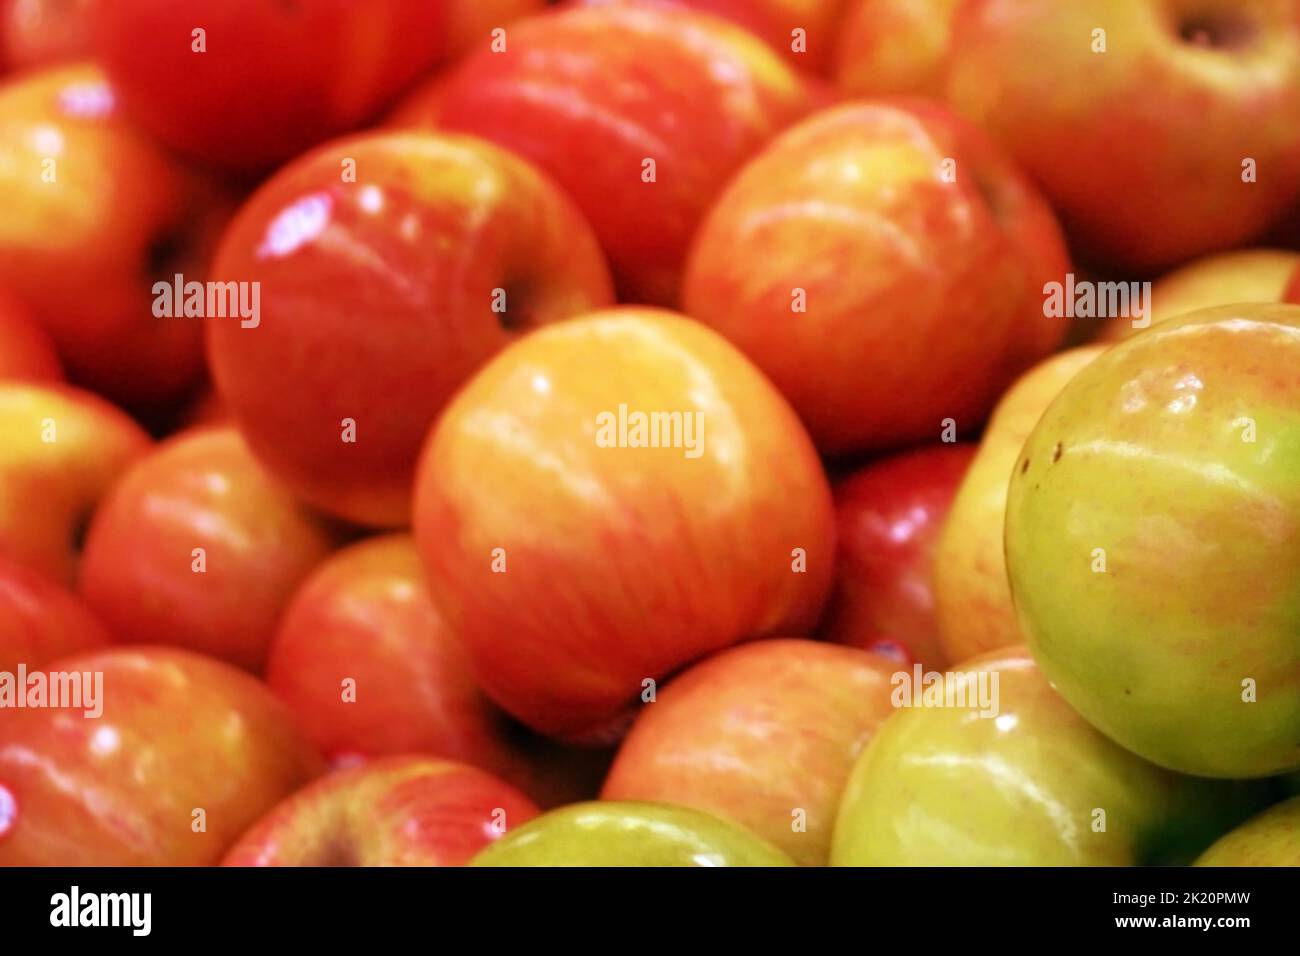 Fattoria di mele rosse e verdi Foto Stock